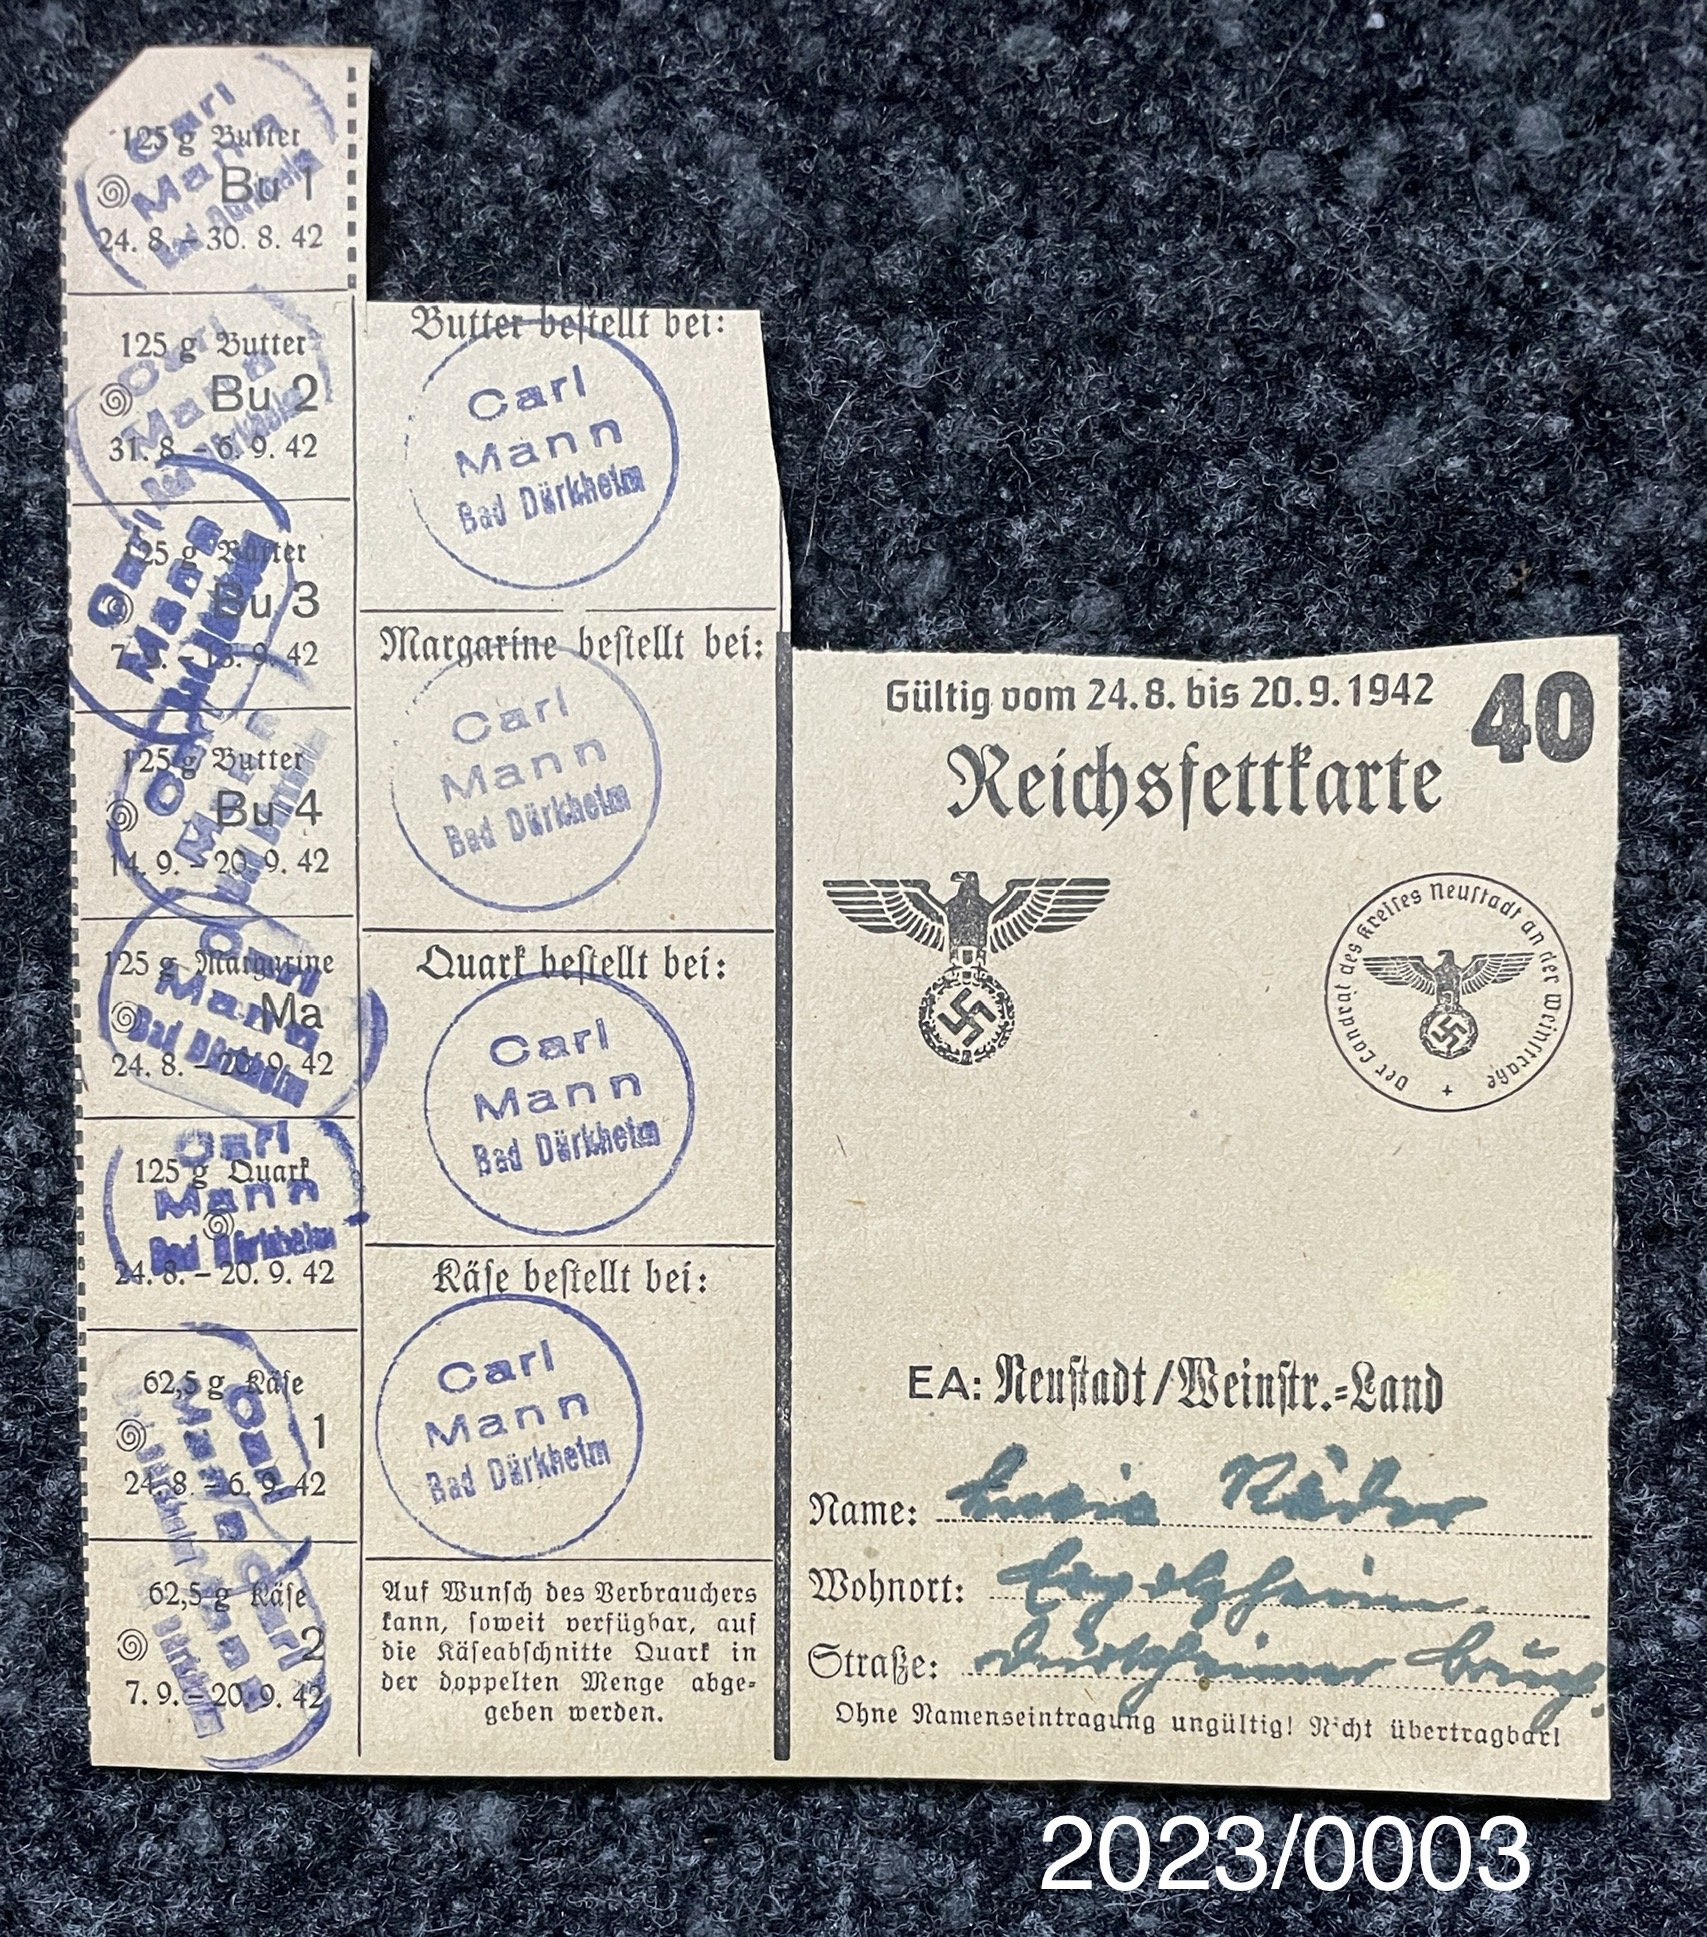 Reichsfettkarte Nr. 40 1942 (Stadtmuseum Bad Dürkheim im Kulturzentrum Haus Catoir CC BY-NC-SA)